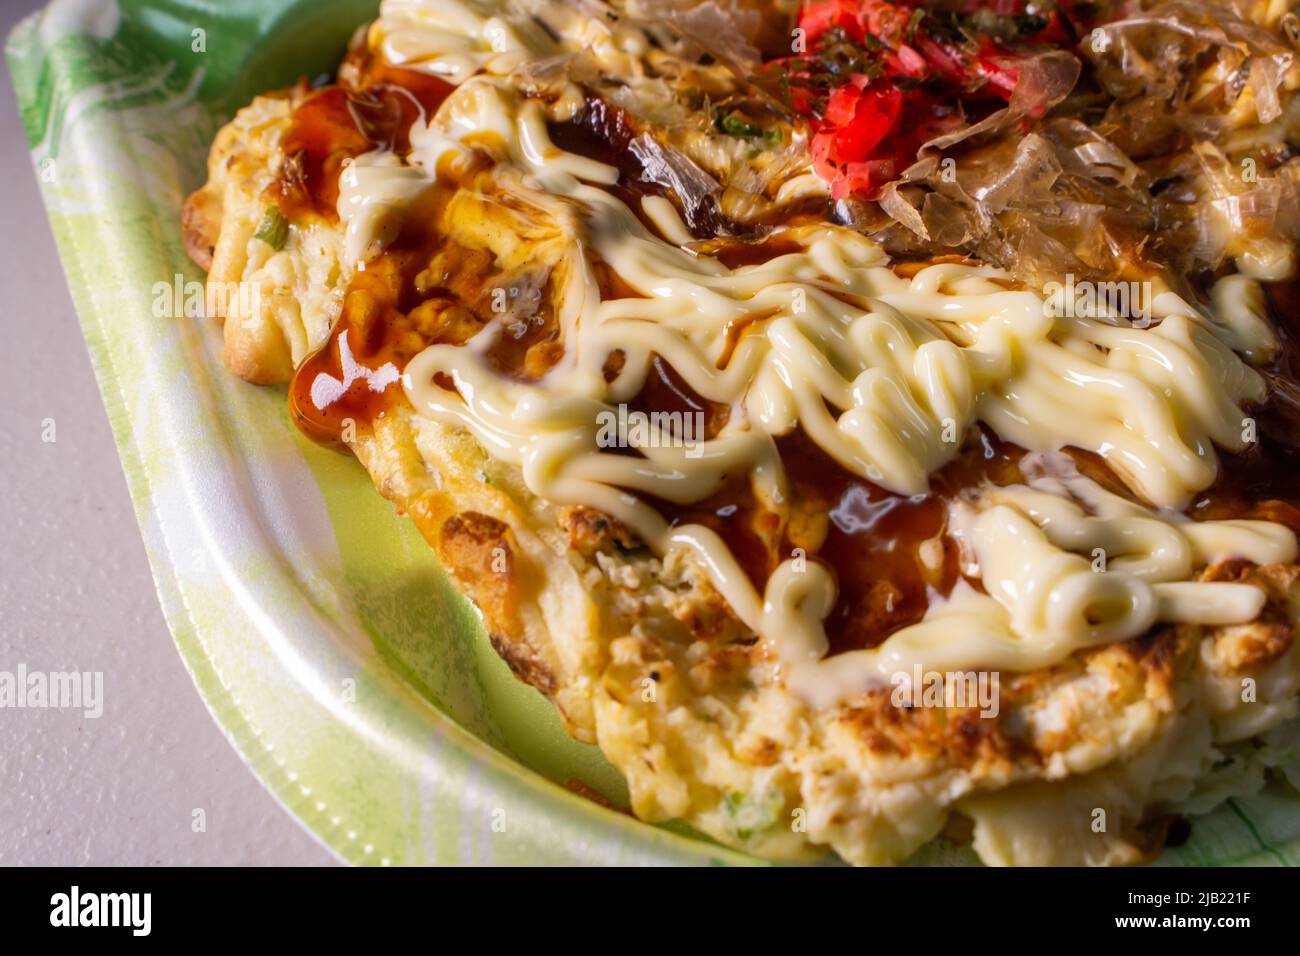 Okonomiyaki, Japanese pancake dish consisting of wheat flour batter & other ingredients, topped with mayonnaise & okonomiyaki sauces in the food tray Stock Photo